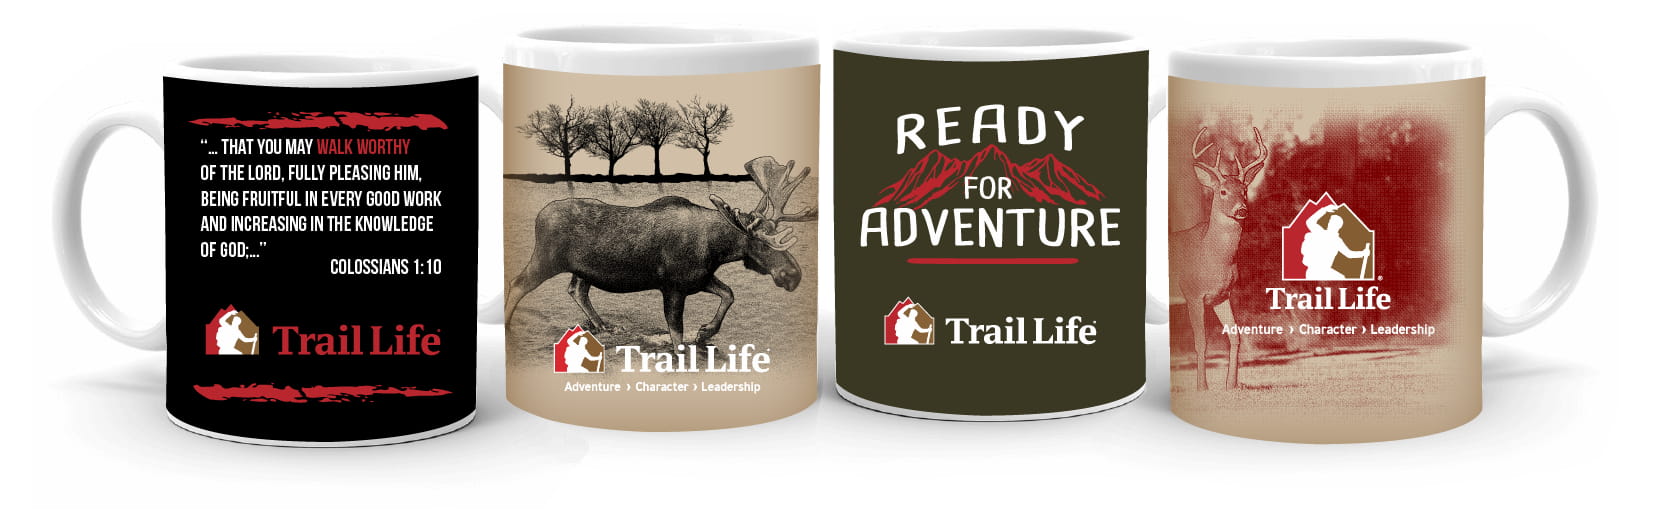 trail life drink ware, mugs